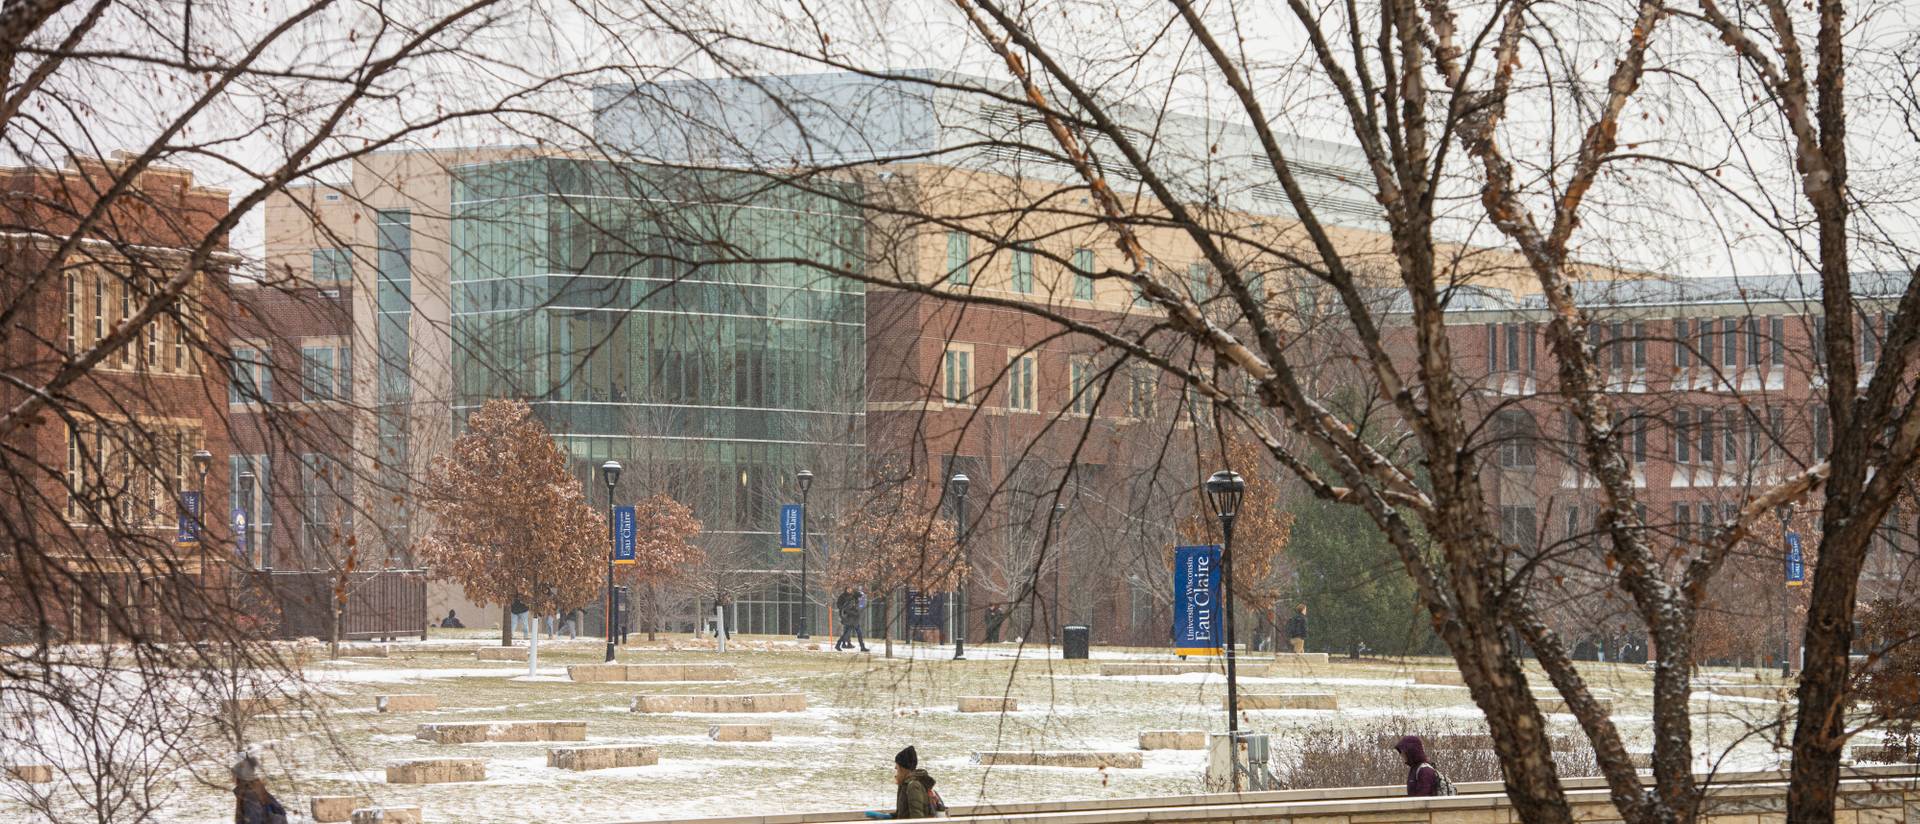 Winter snow scene on lower campus